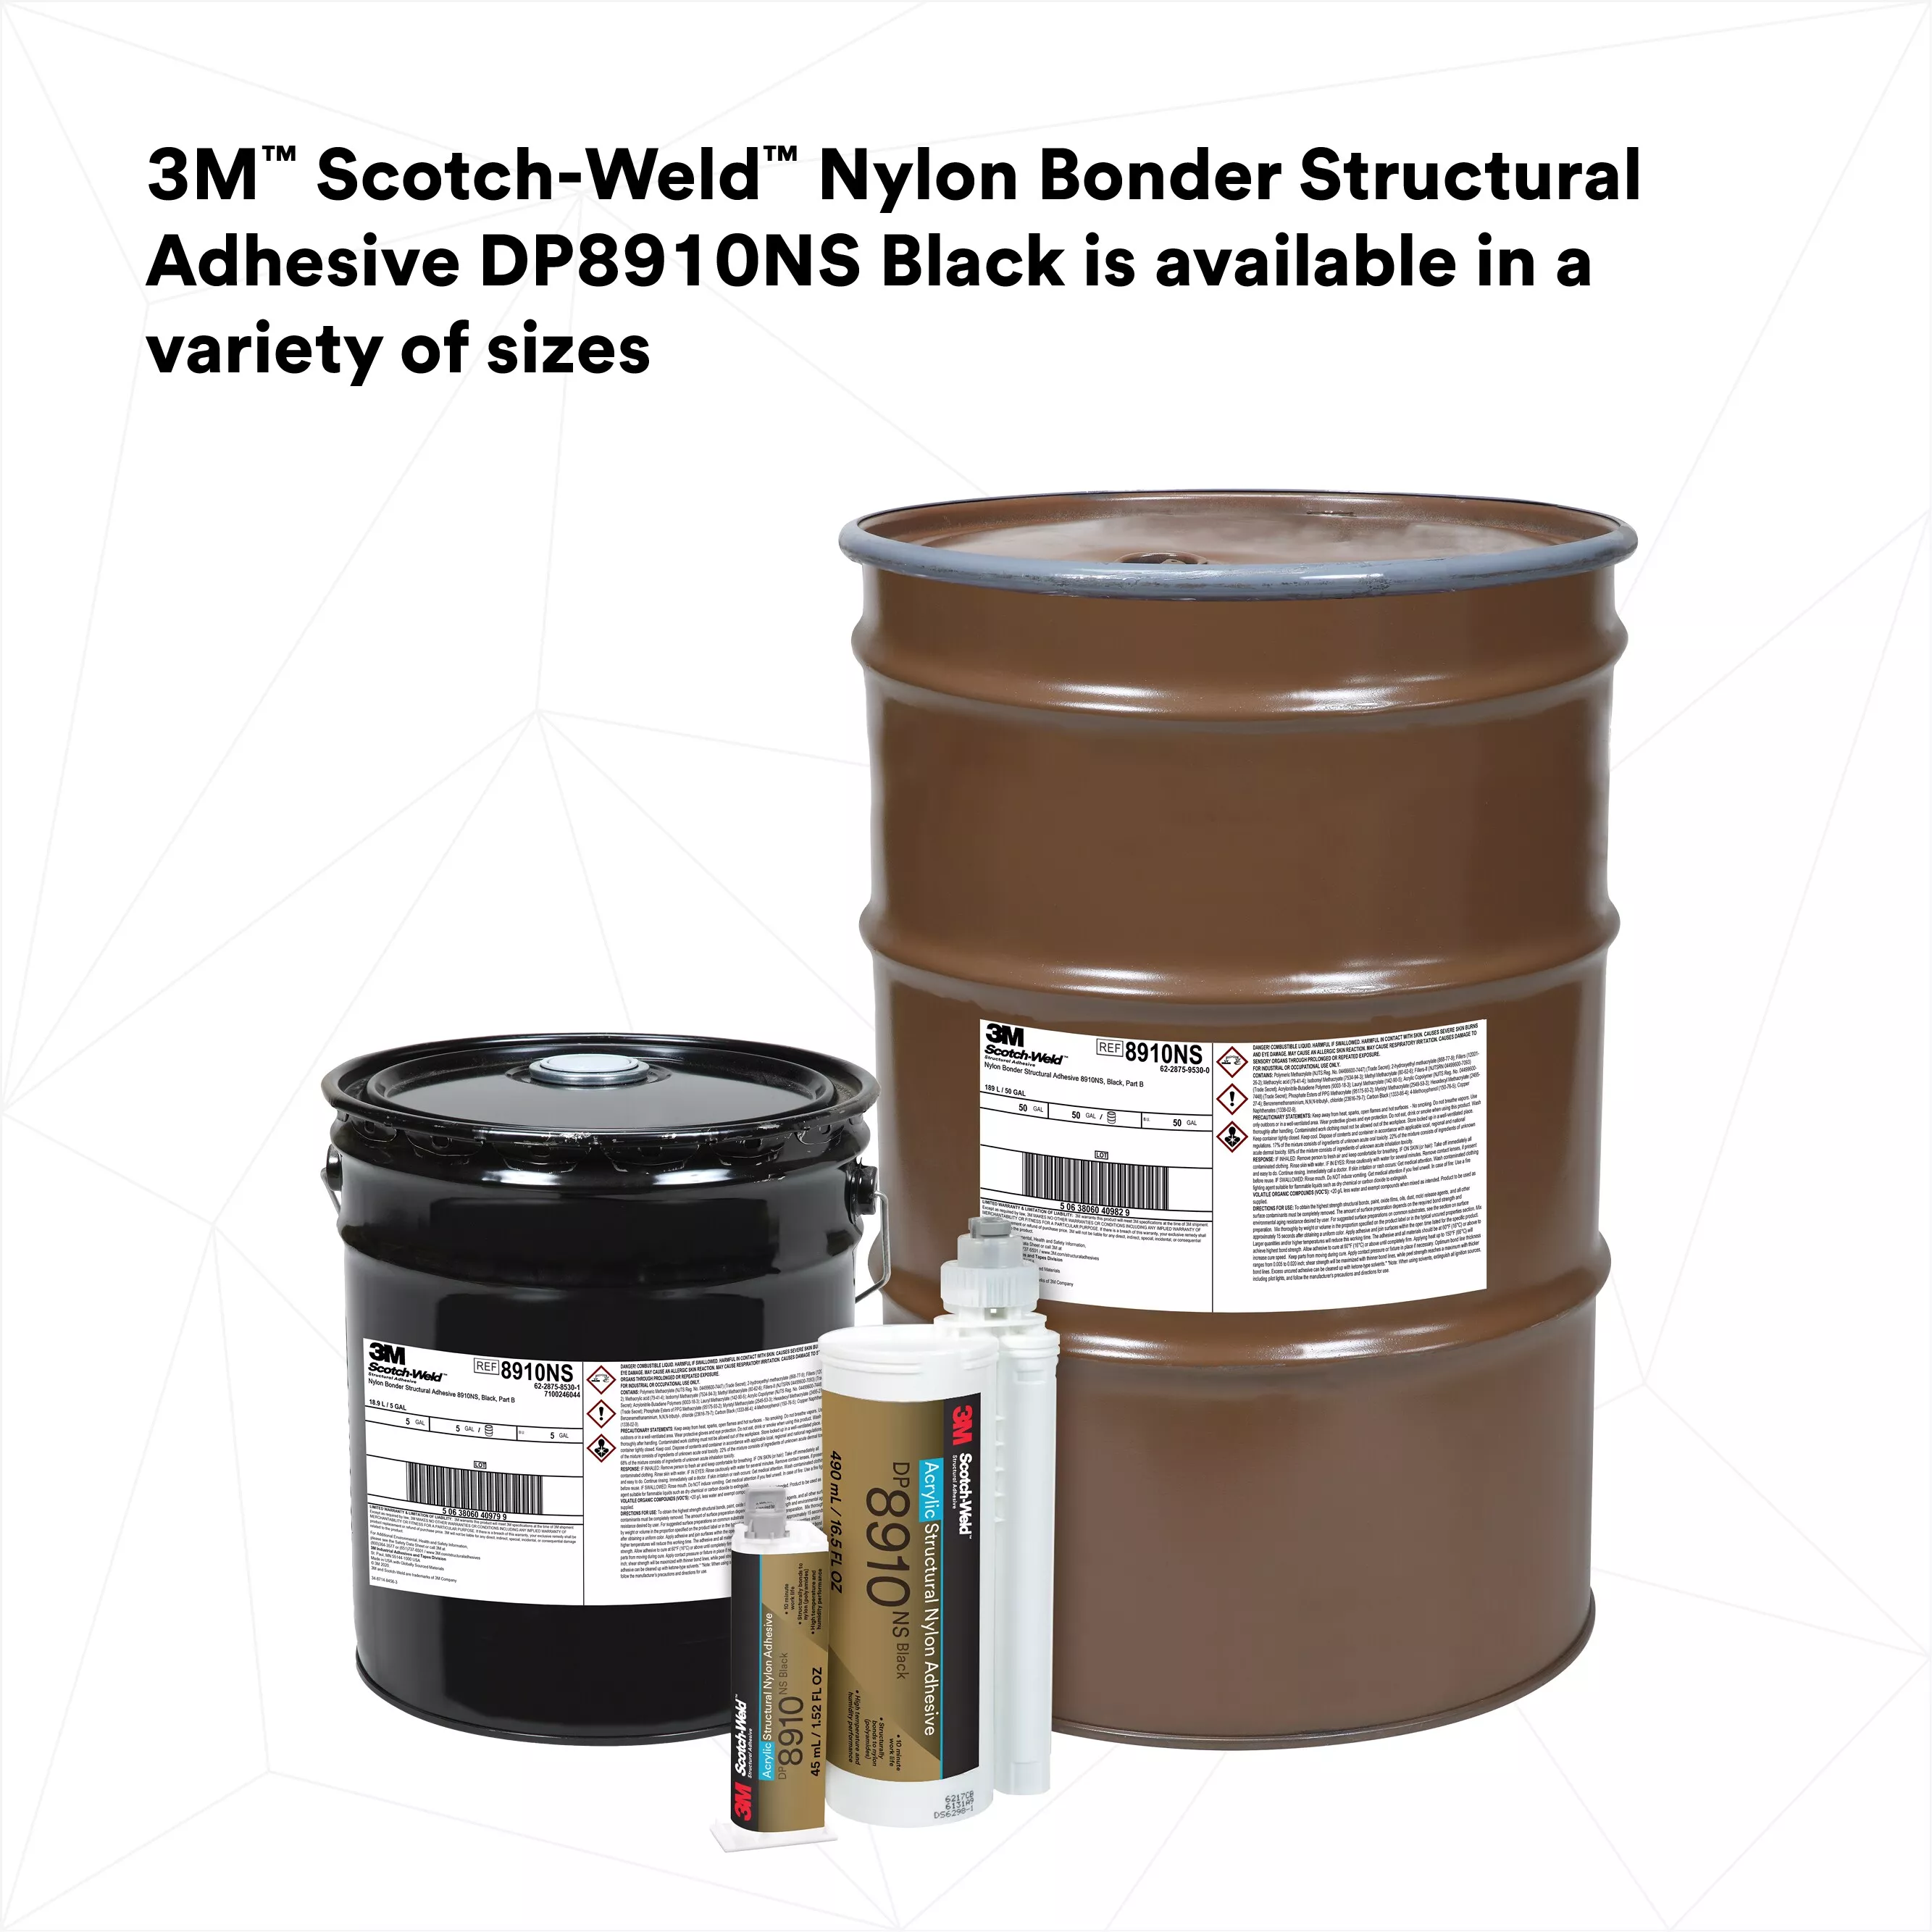 SKU 7100246043 | 3M™ Scotch-Weld™ Nylon Bonder Structural Adhesive DP8910NS